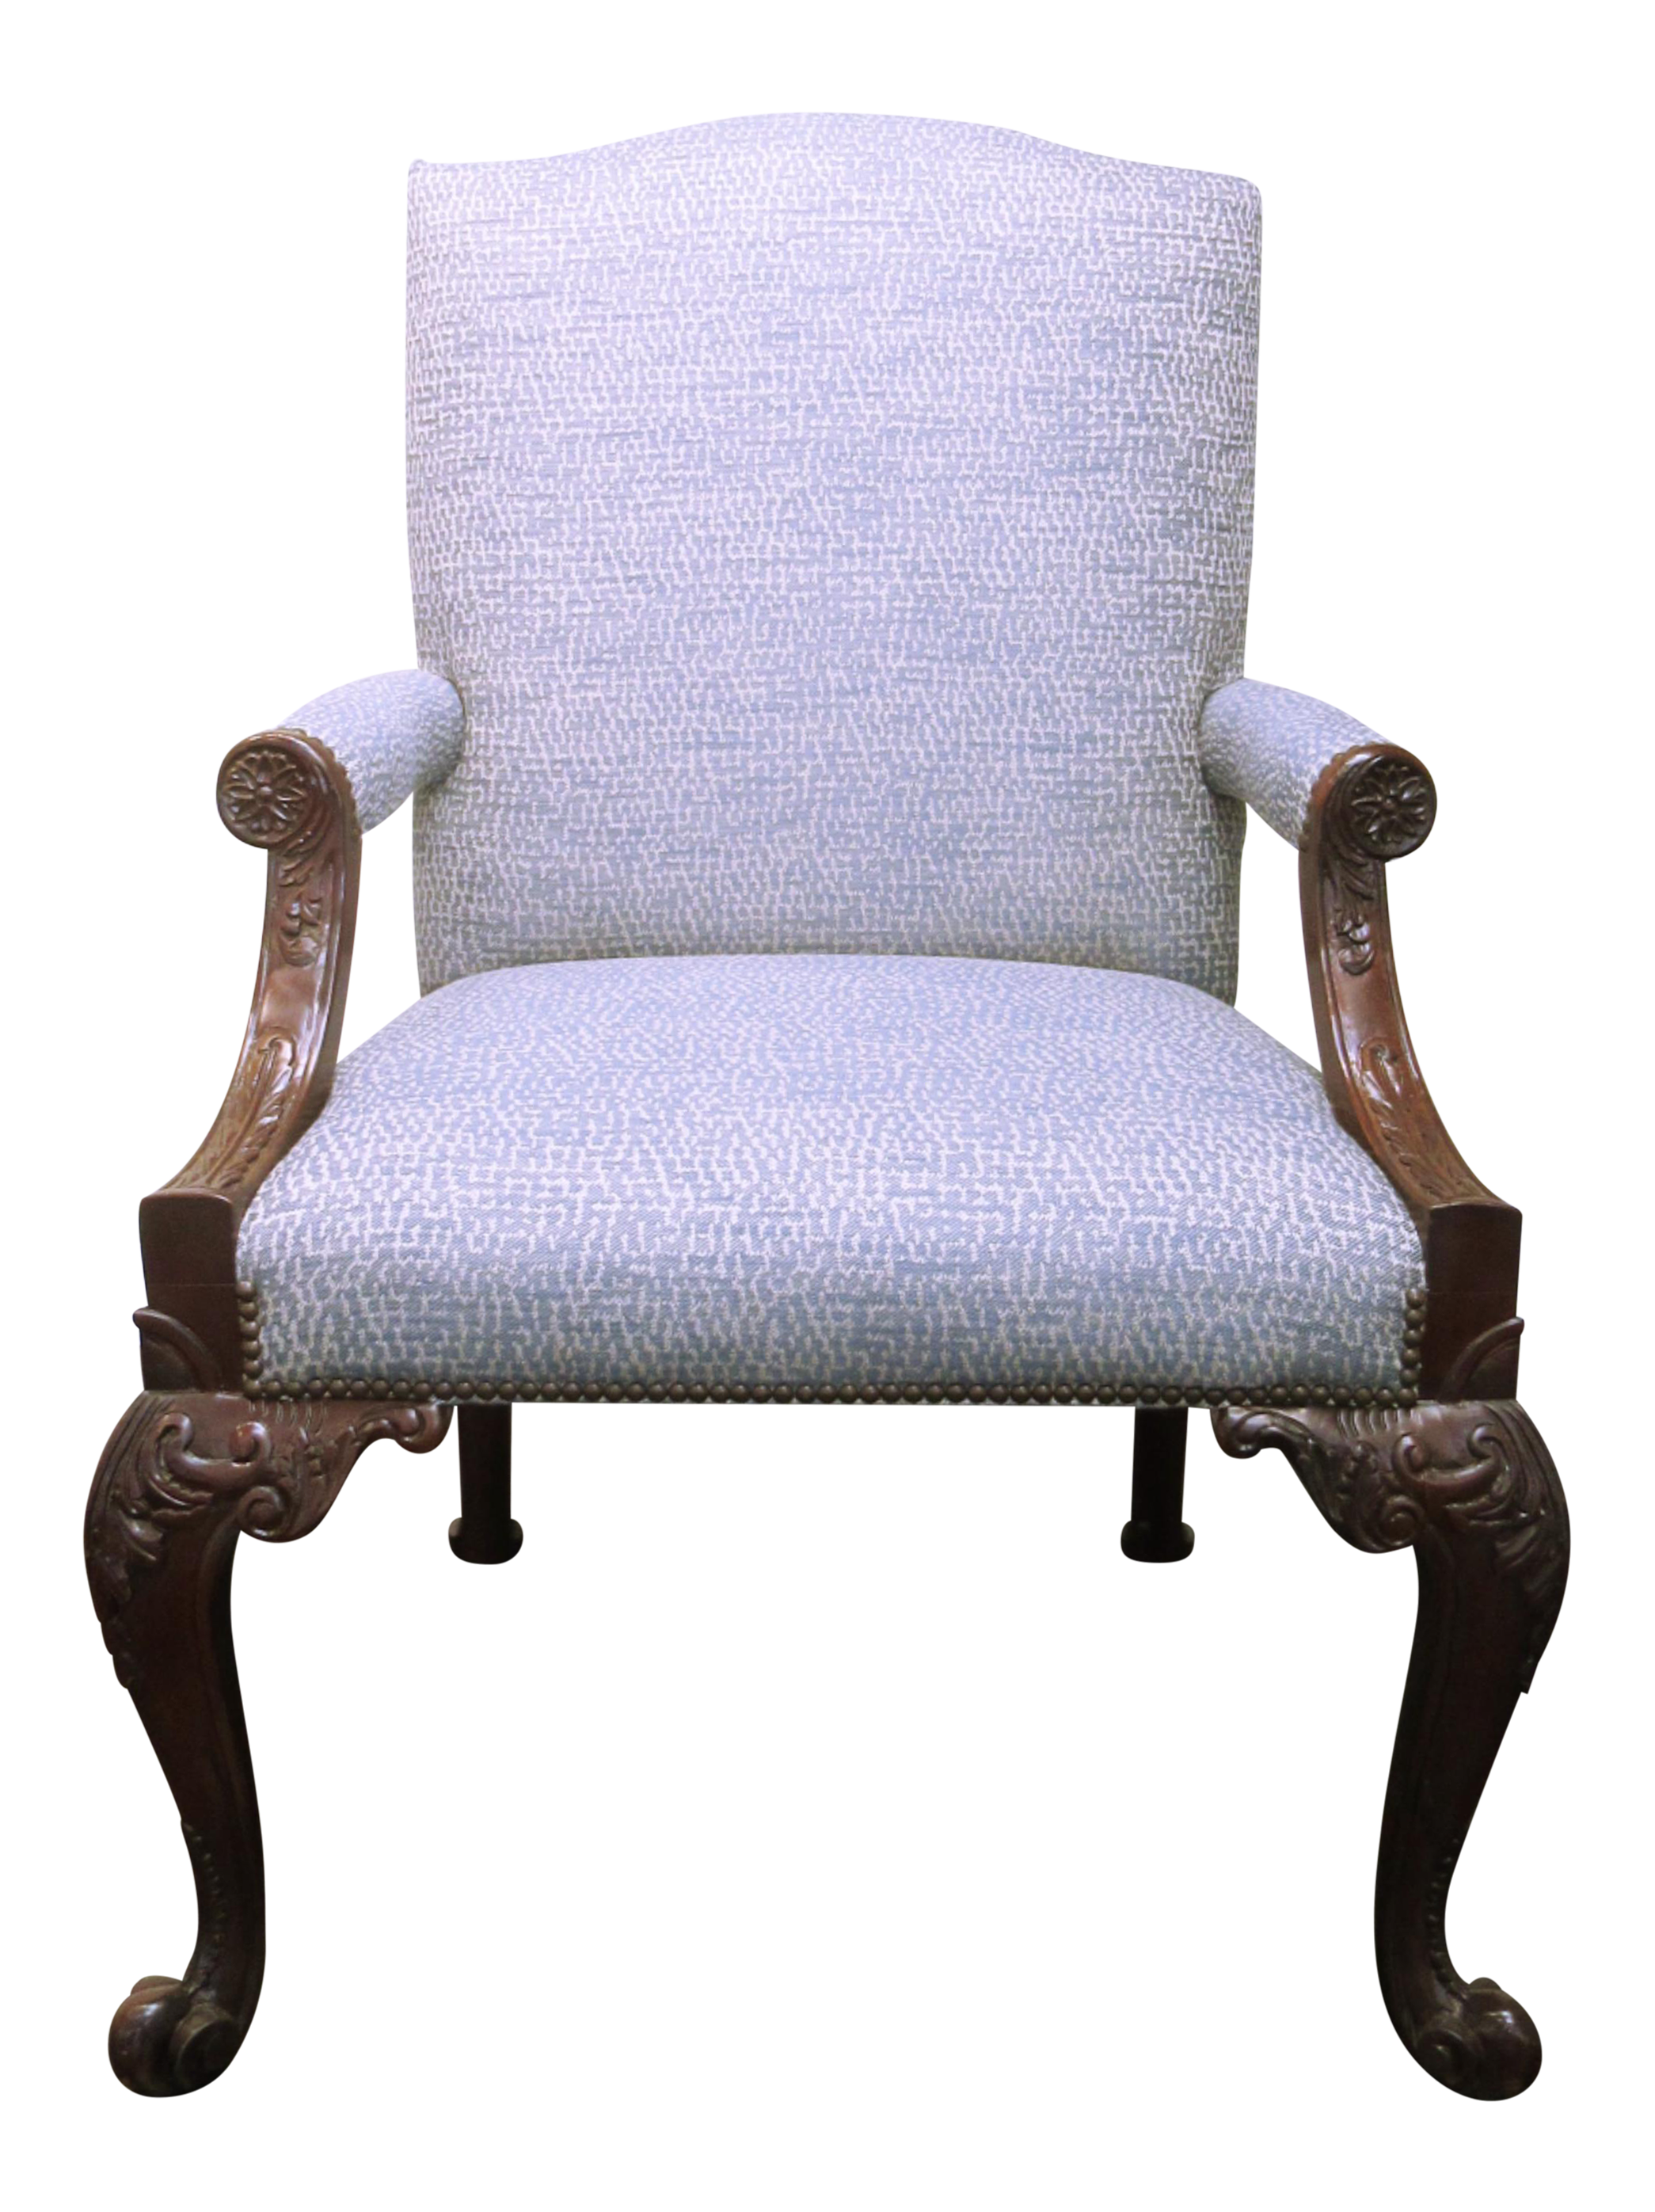 Gainsborough chair PNG Image